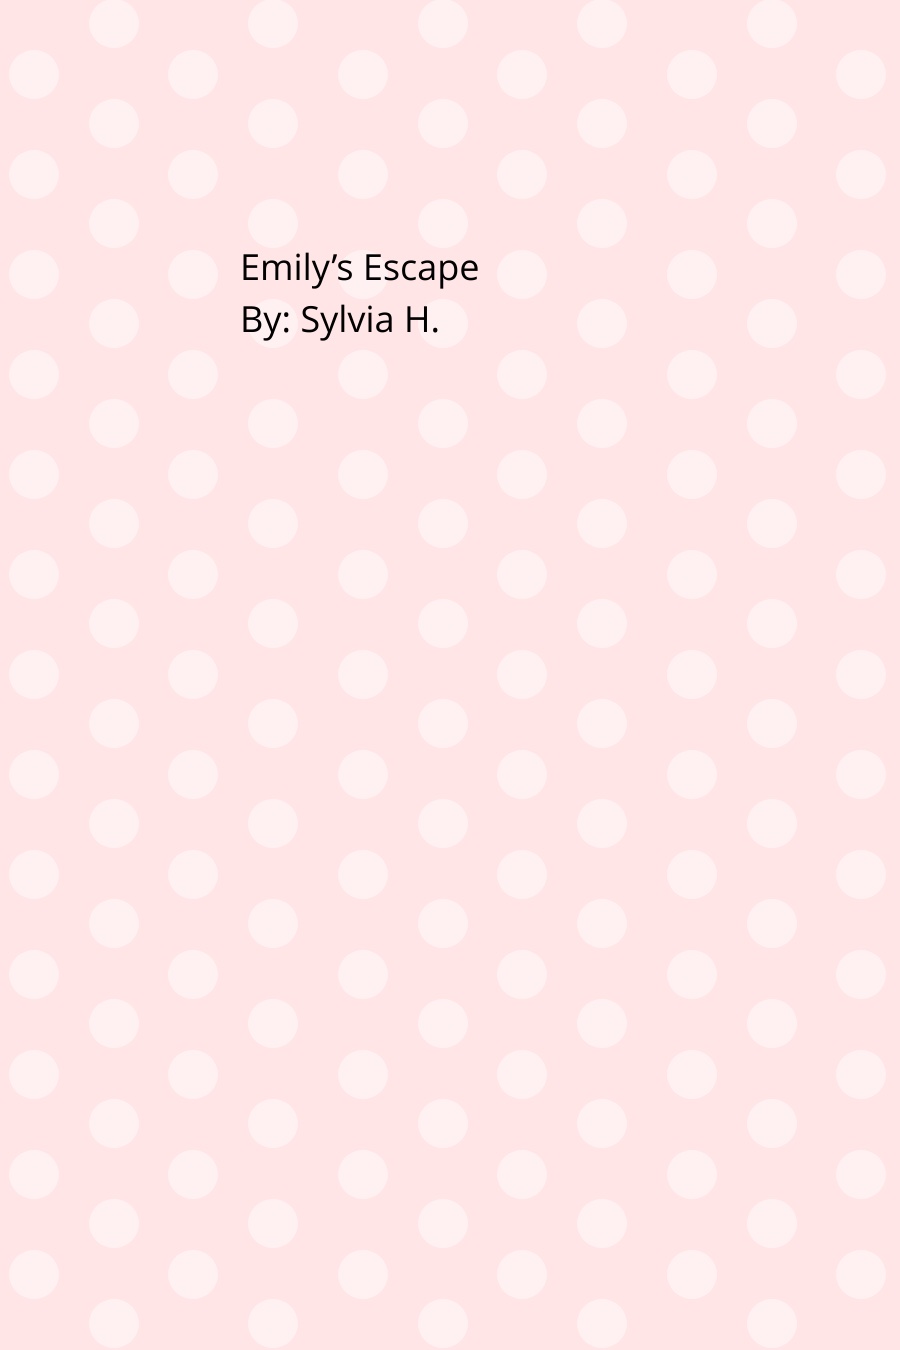 Emily’s Escape By Sylvia H